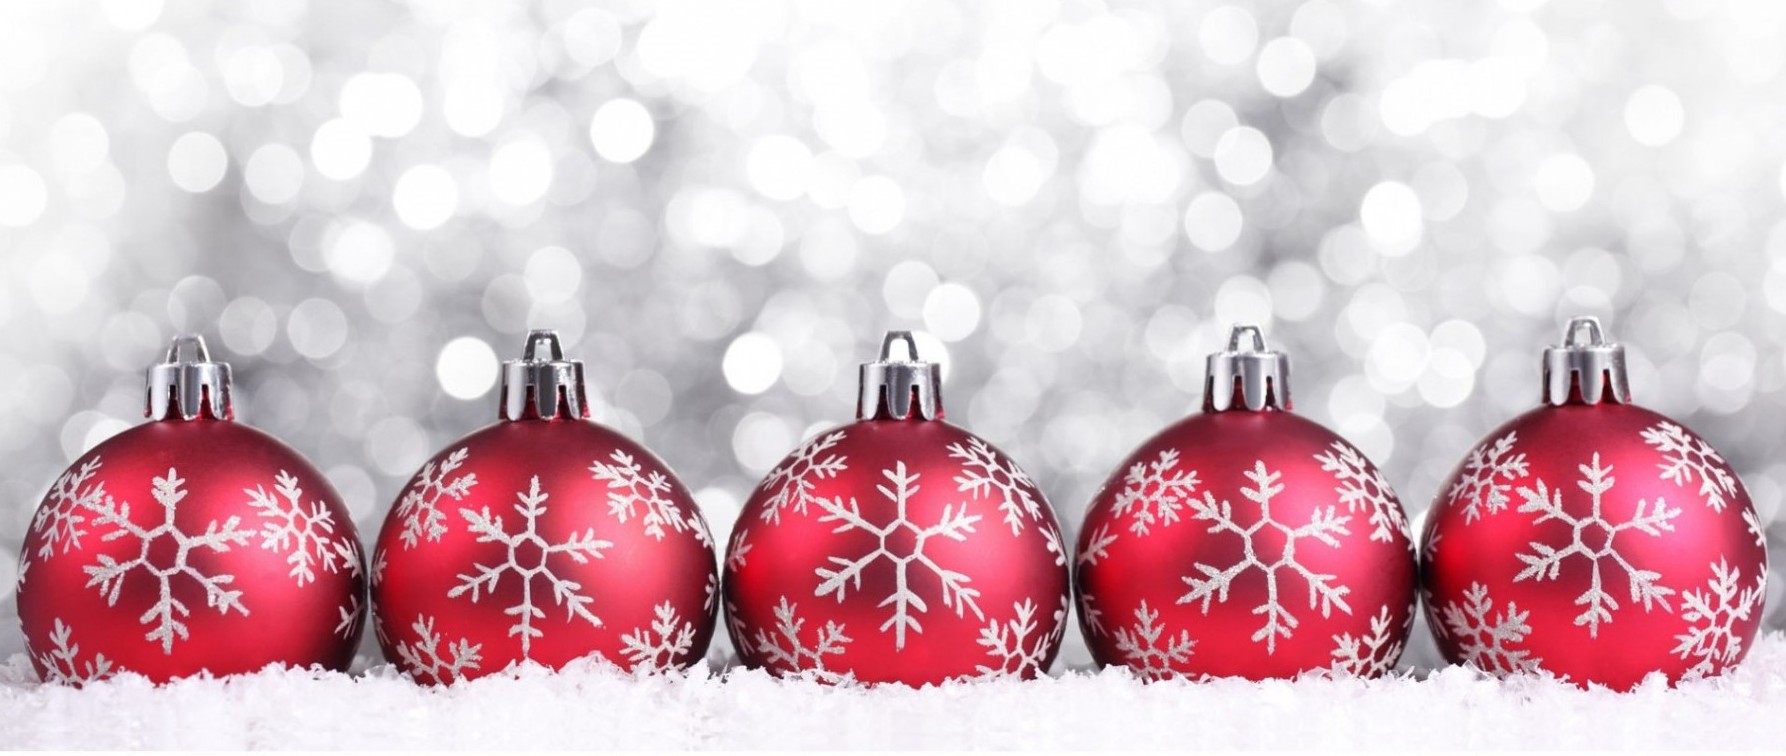 Red-Christmas-decorations-christmas-22228015-1920-1200